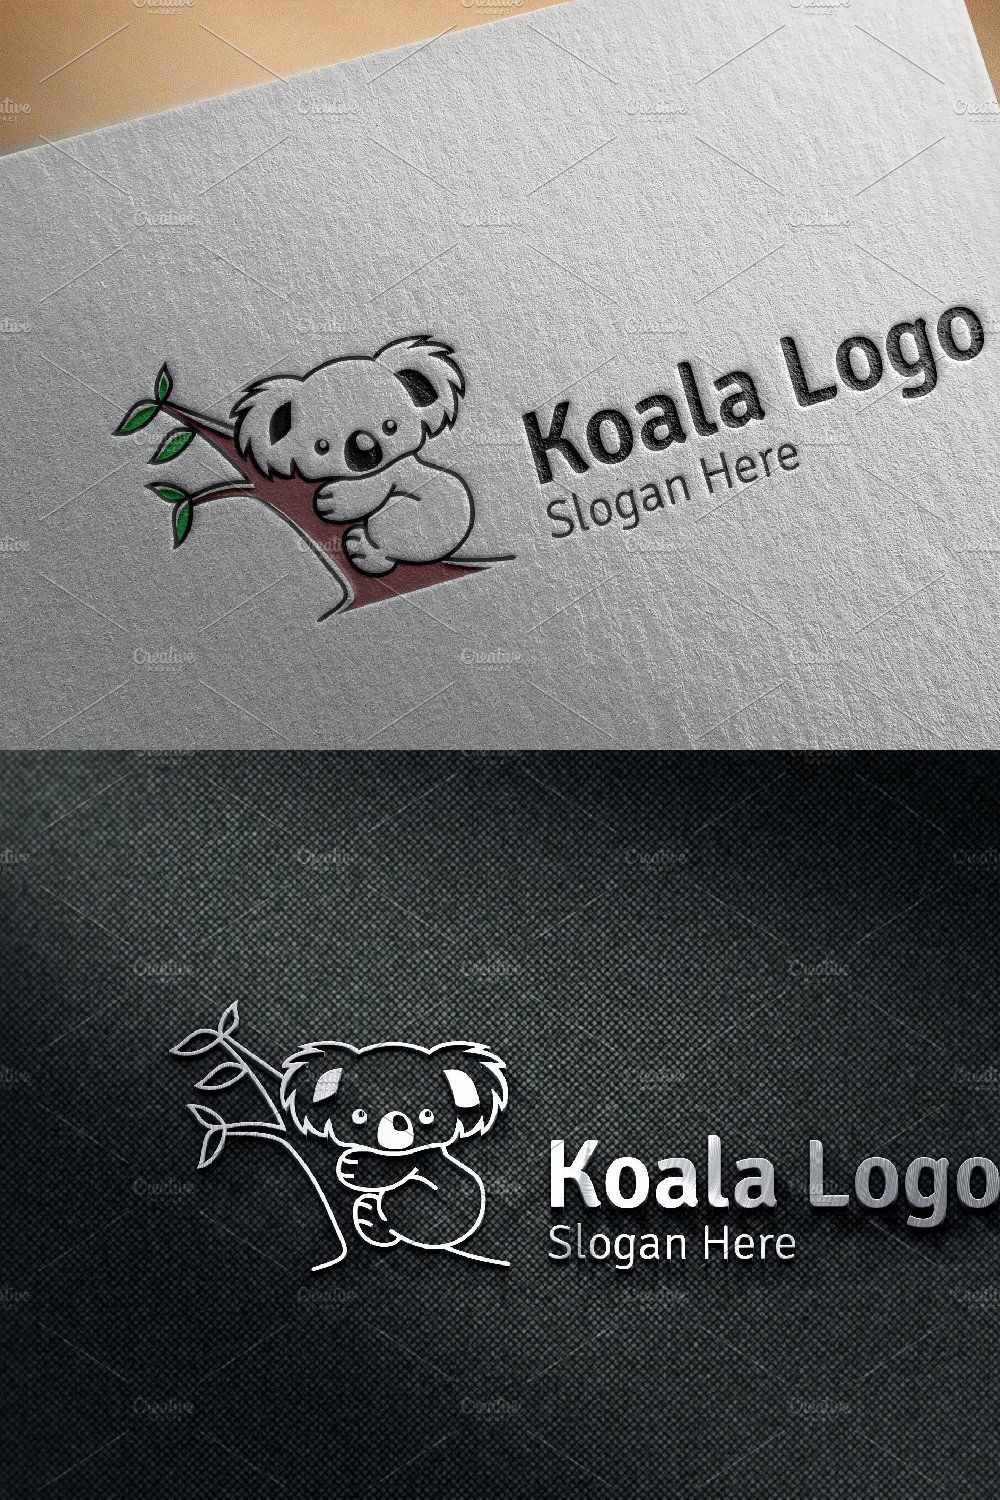 Koala logo pinterest preview image.